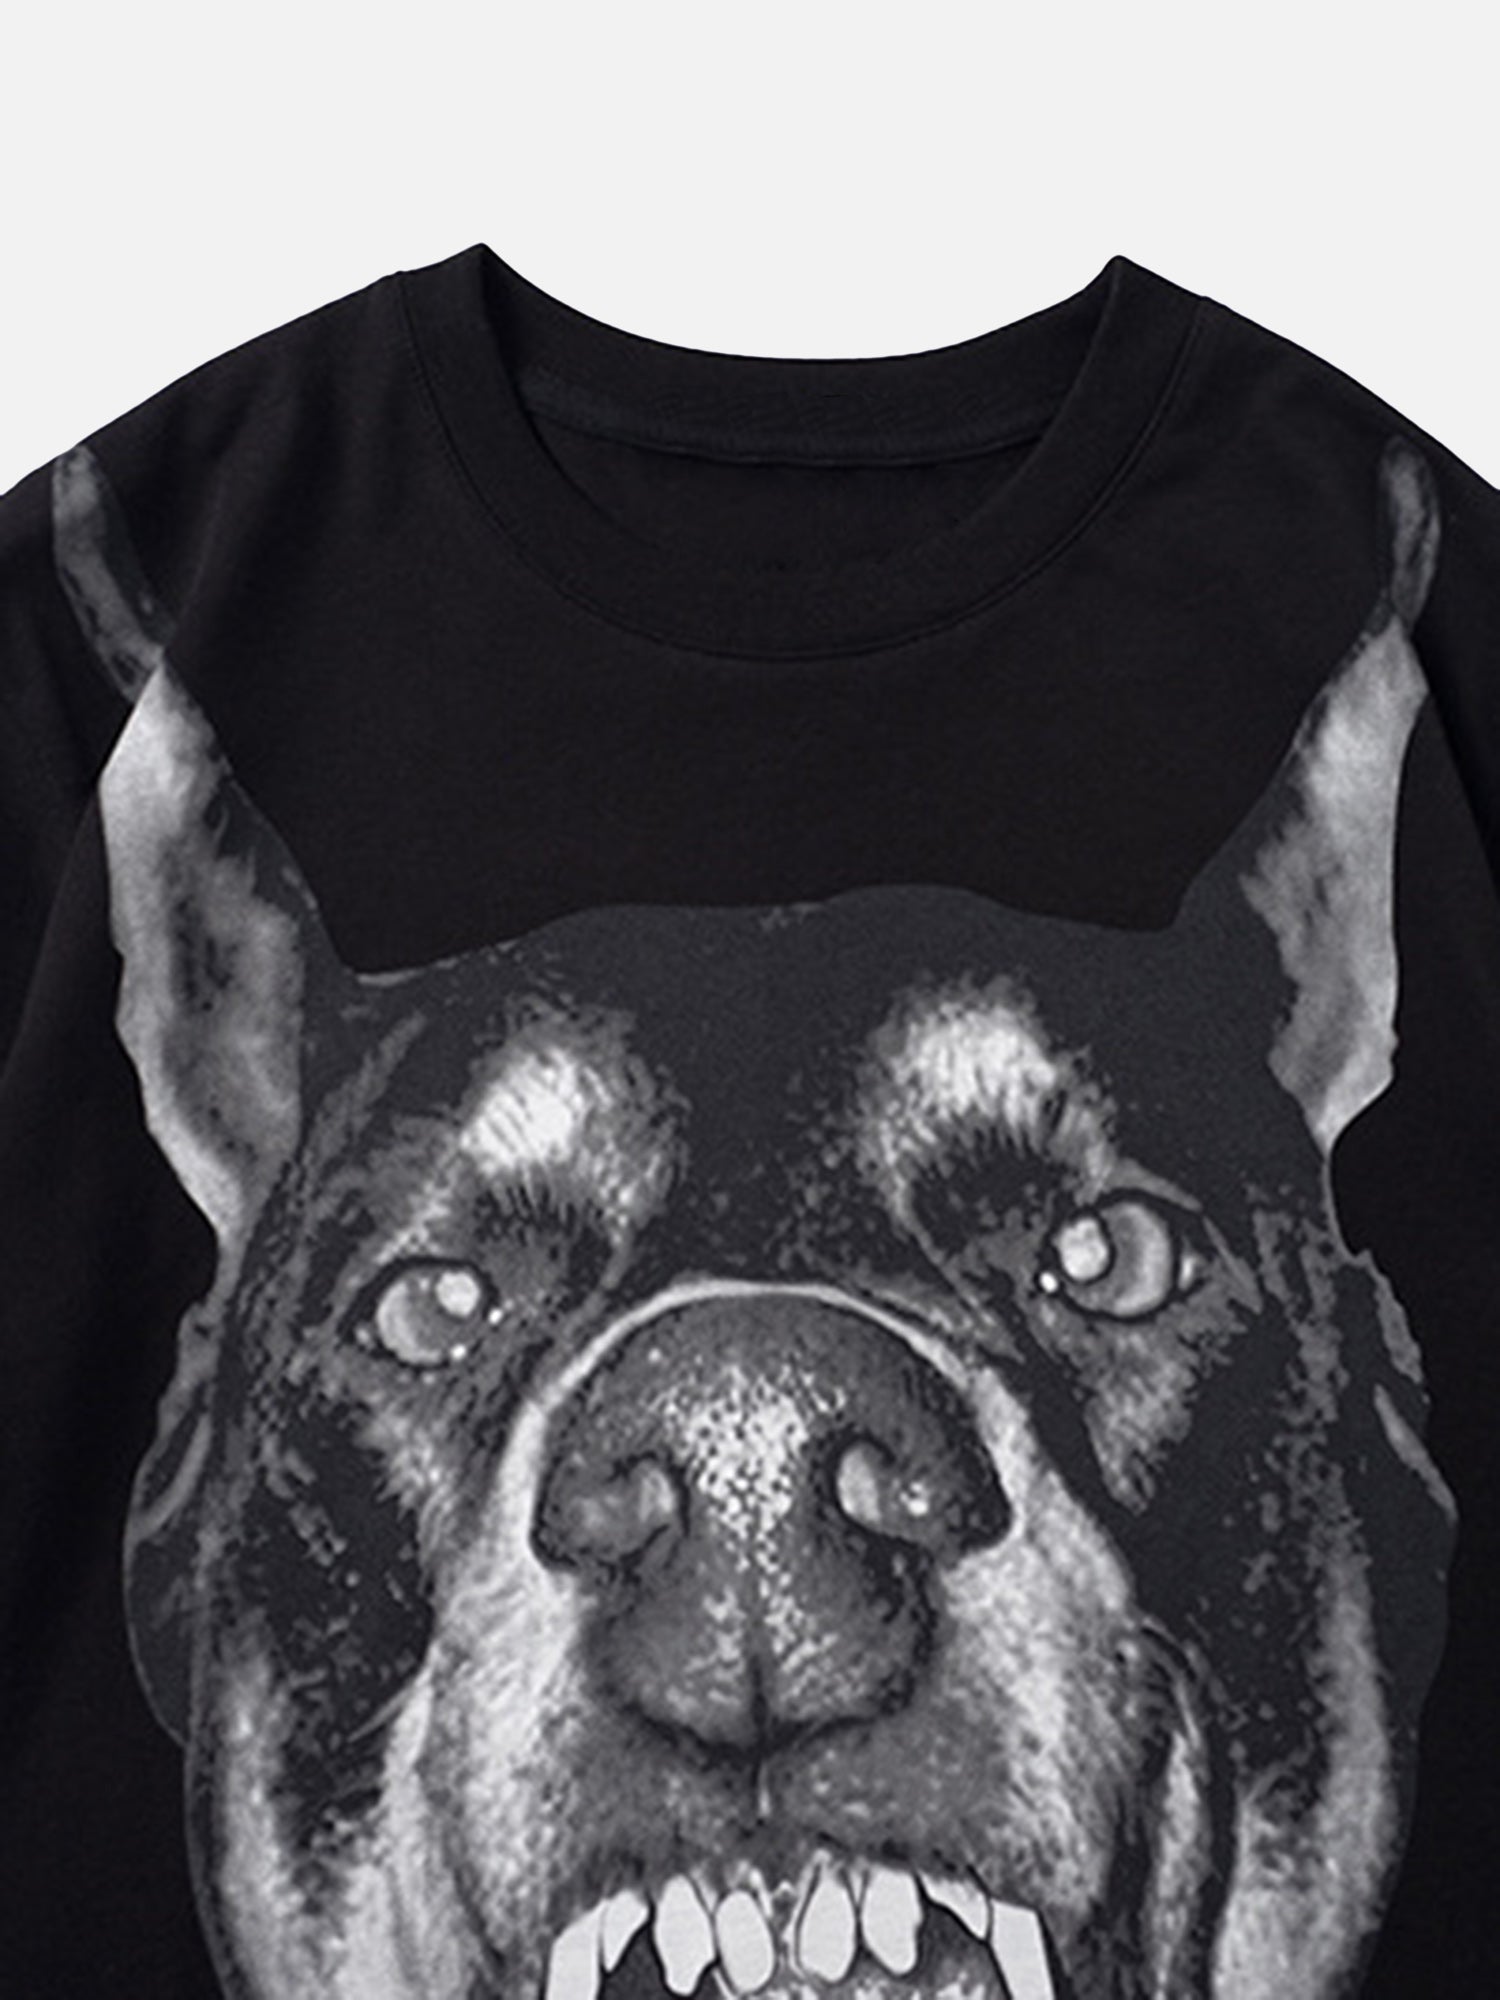 Thesupermade 3D Printed Doberman Dog Head Hip Hop T-shirt